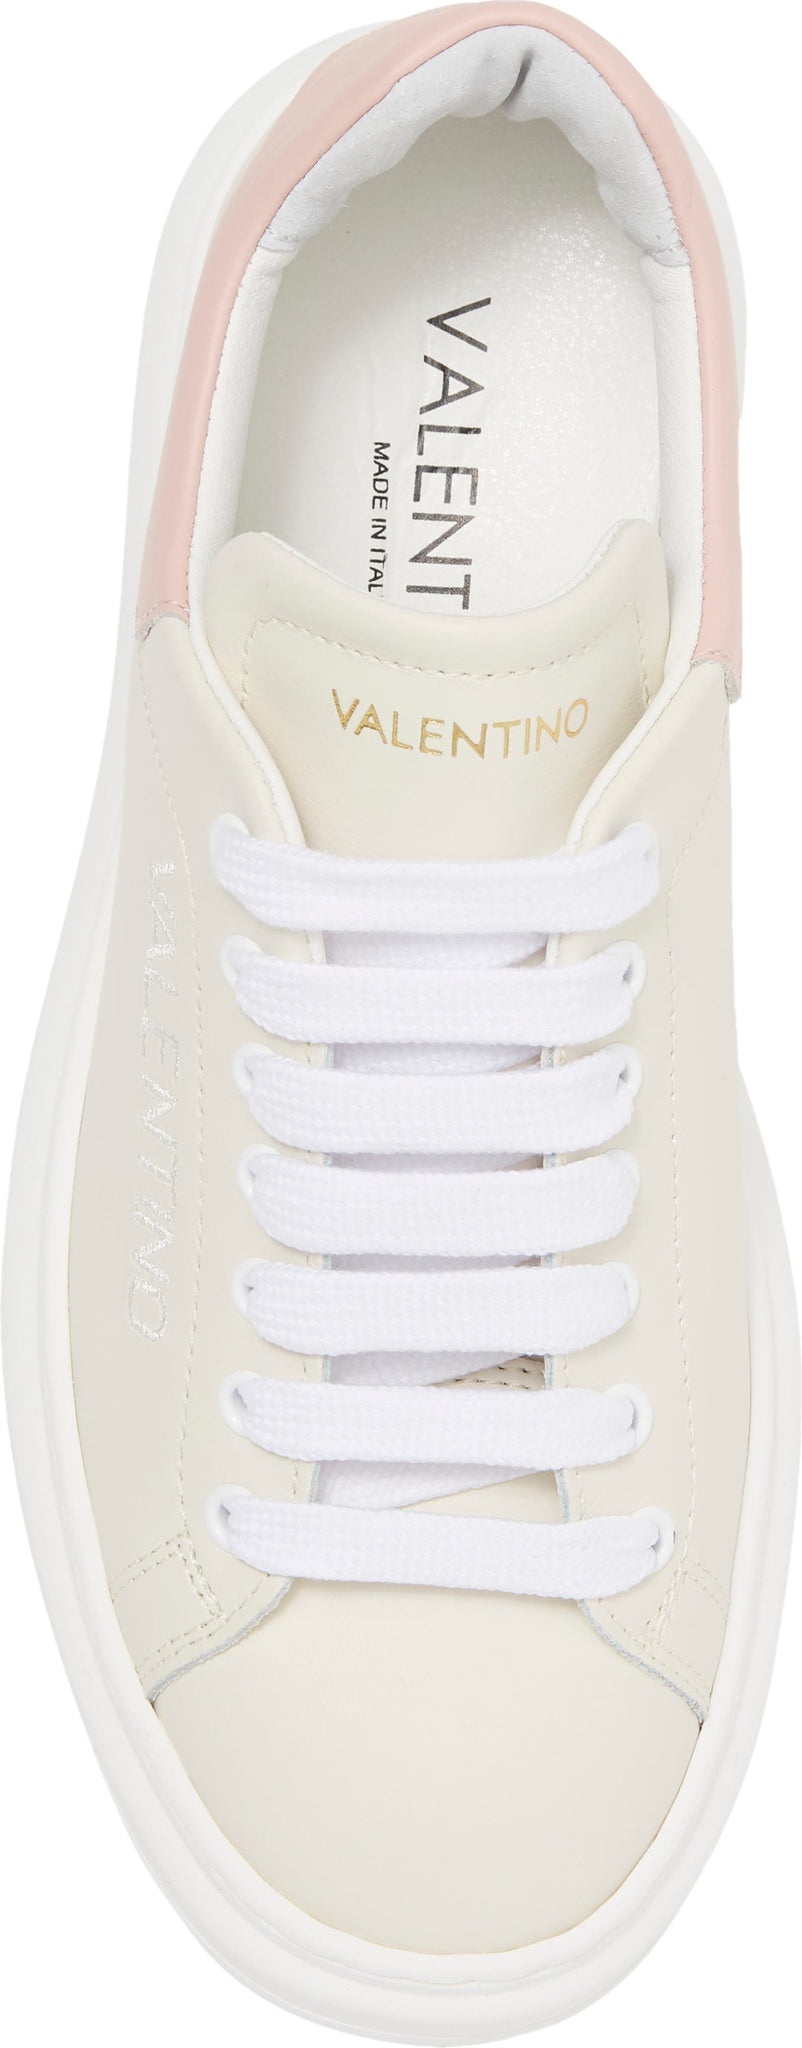 VALENTINO BY MARIO VALENTINO Fresia Leather Fashion Sneaker, Alternate, color, WHITE/ BLUSH